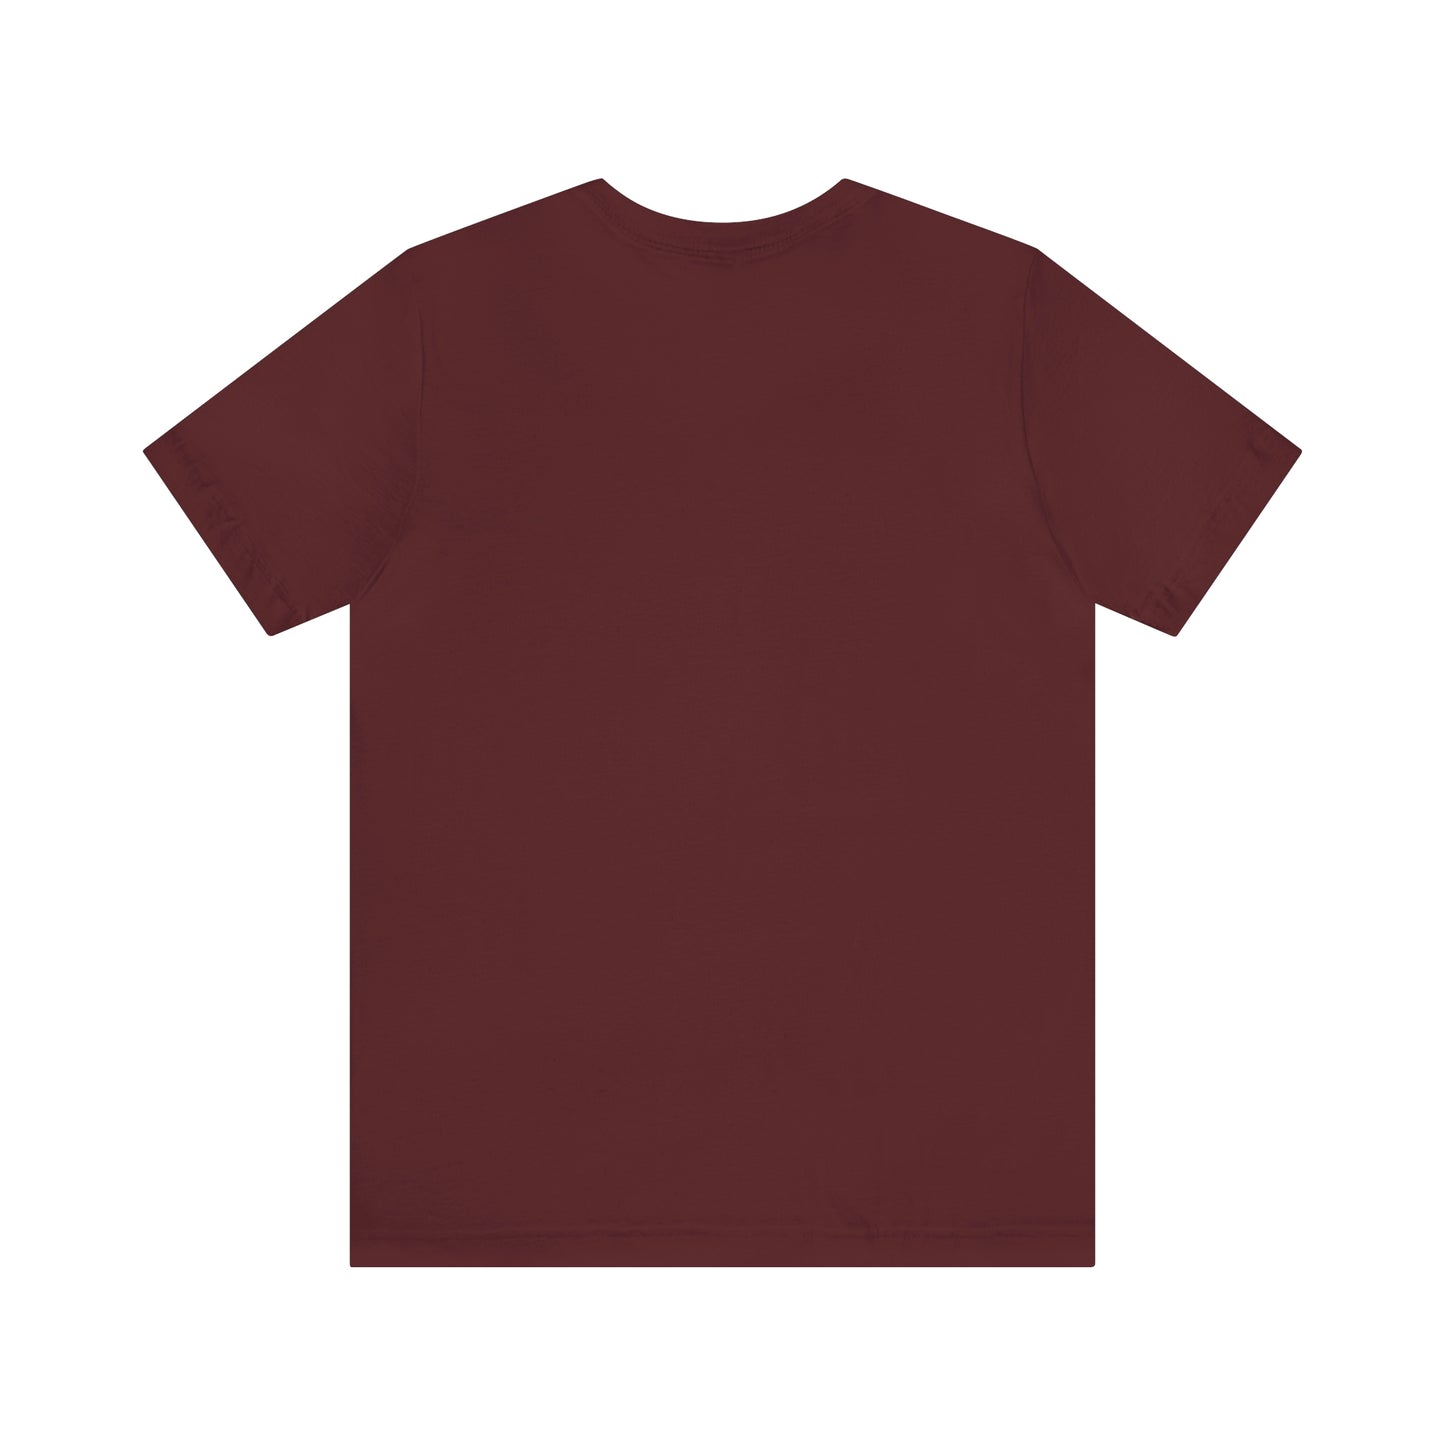 Tee Shirt | Get Bronzed